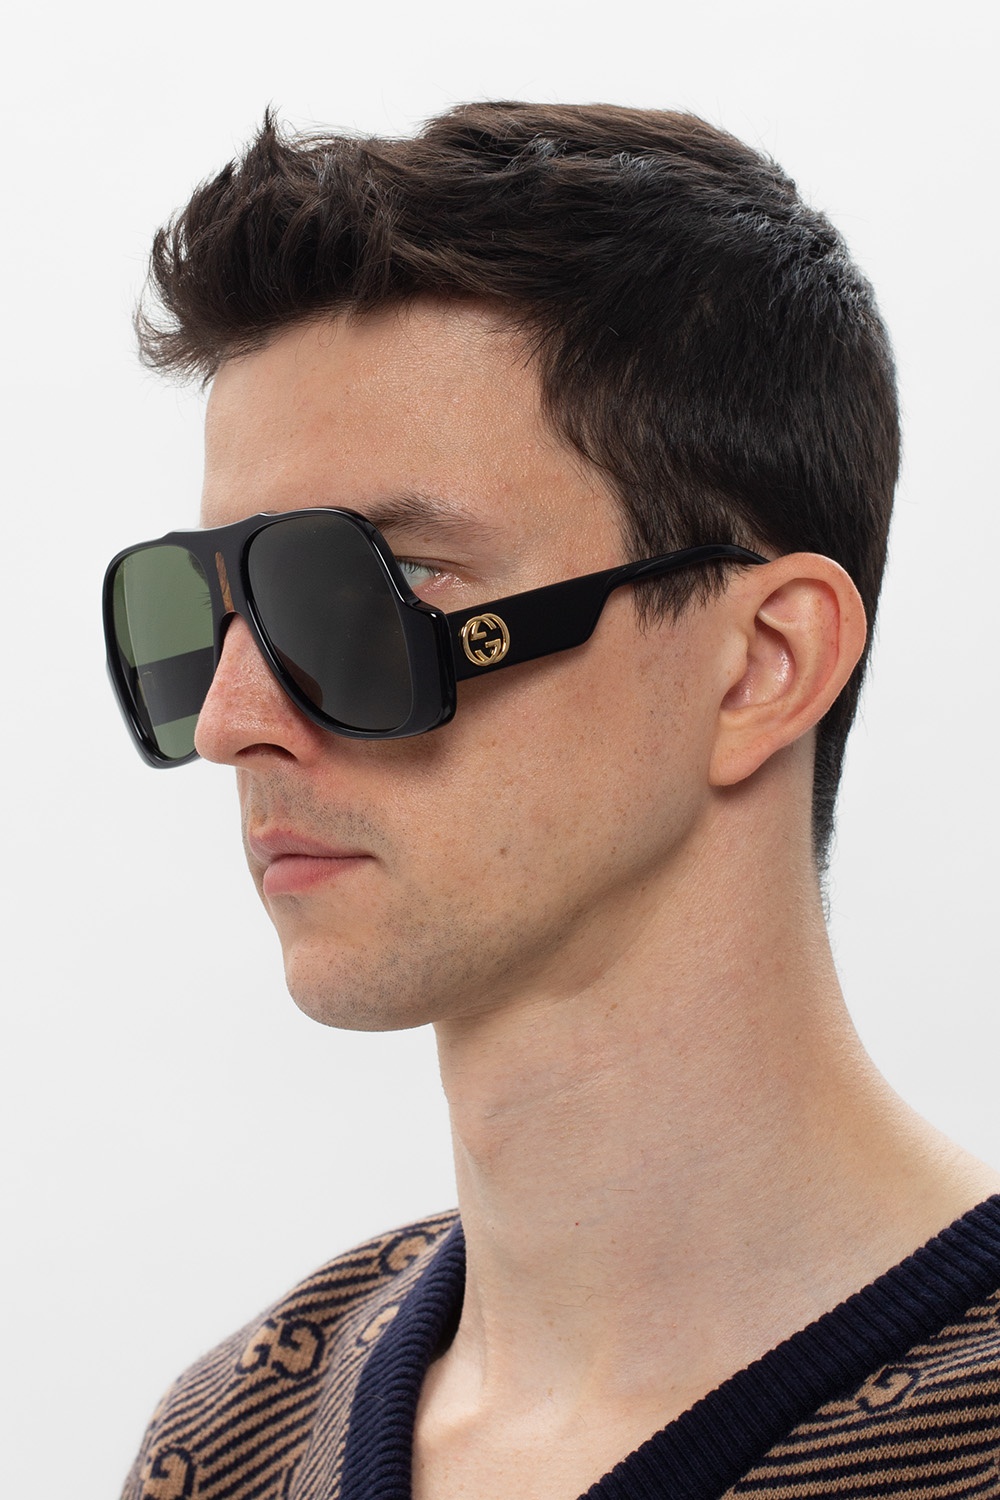 Gucci Wonder Boy II square-frame sunglasses